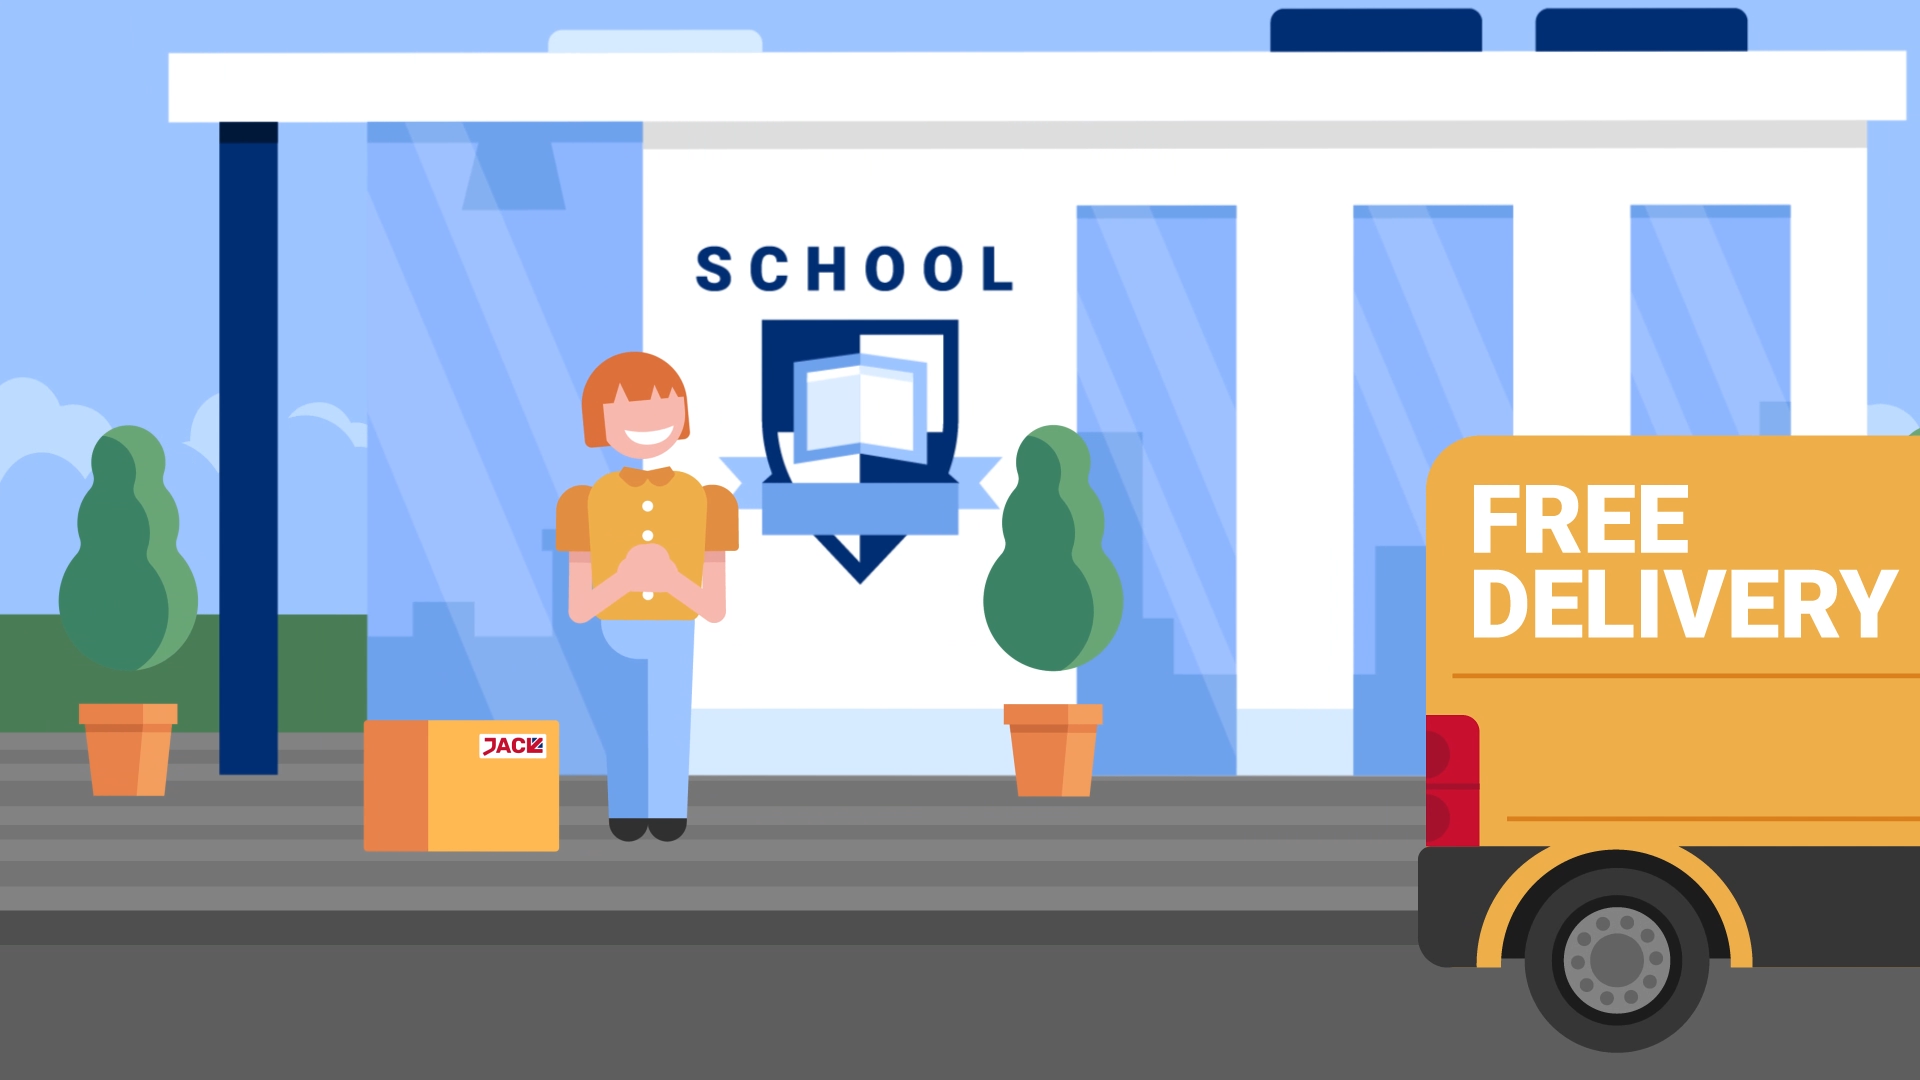 Vector illustration of a van delivering to a school